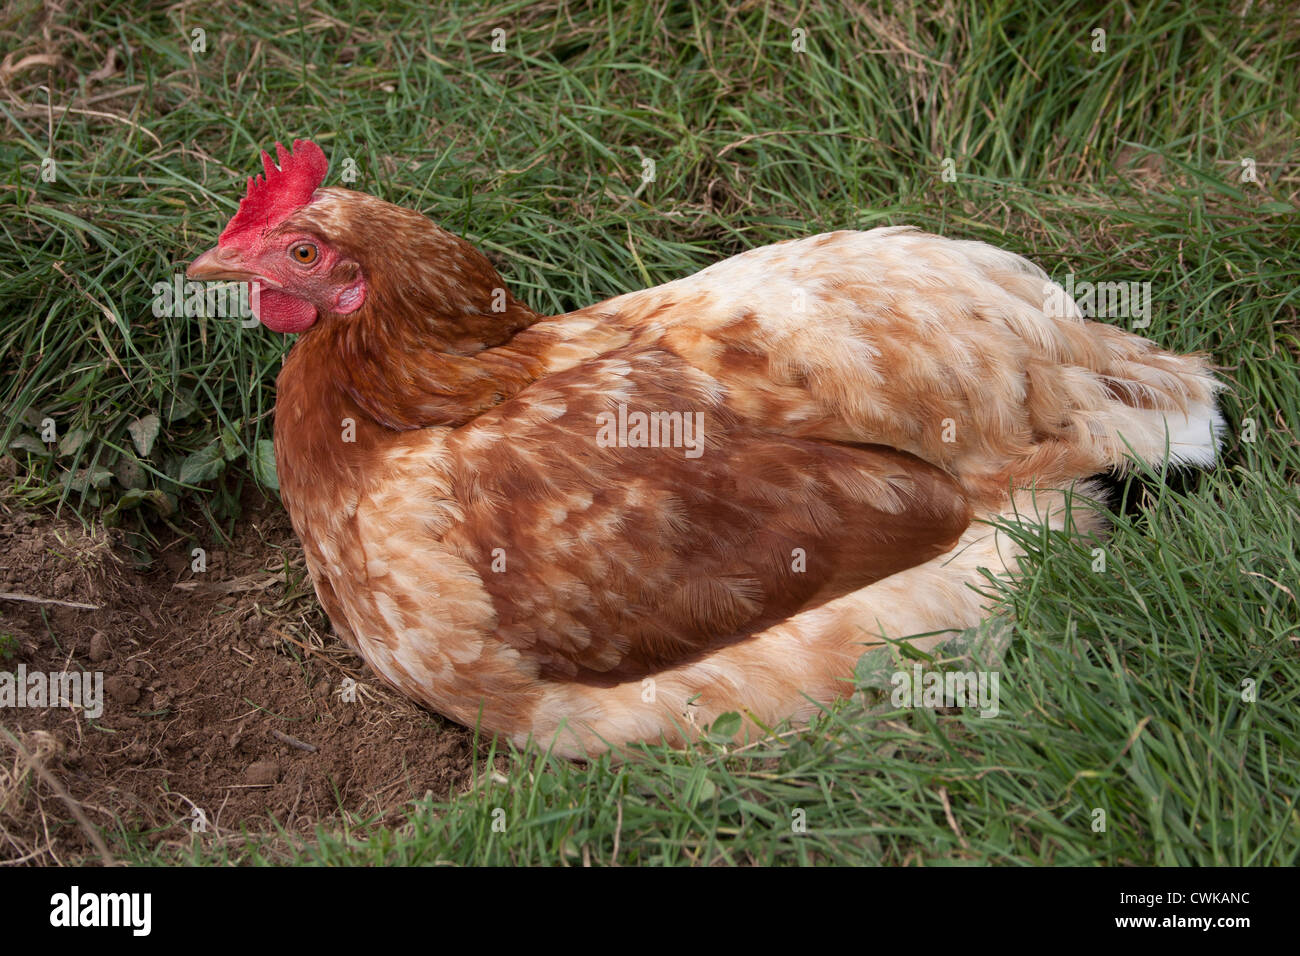 chicken having dust bath Stock Photo